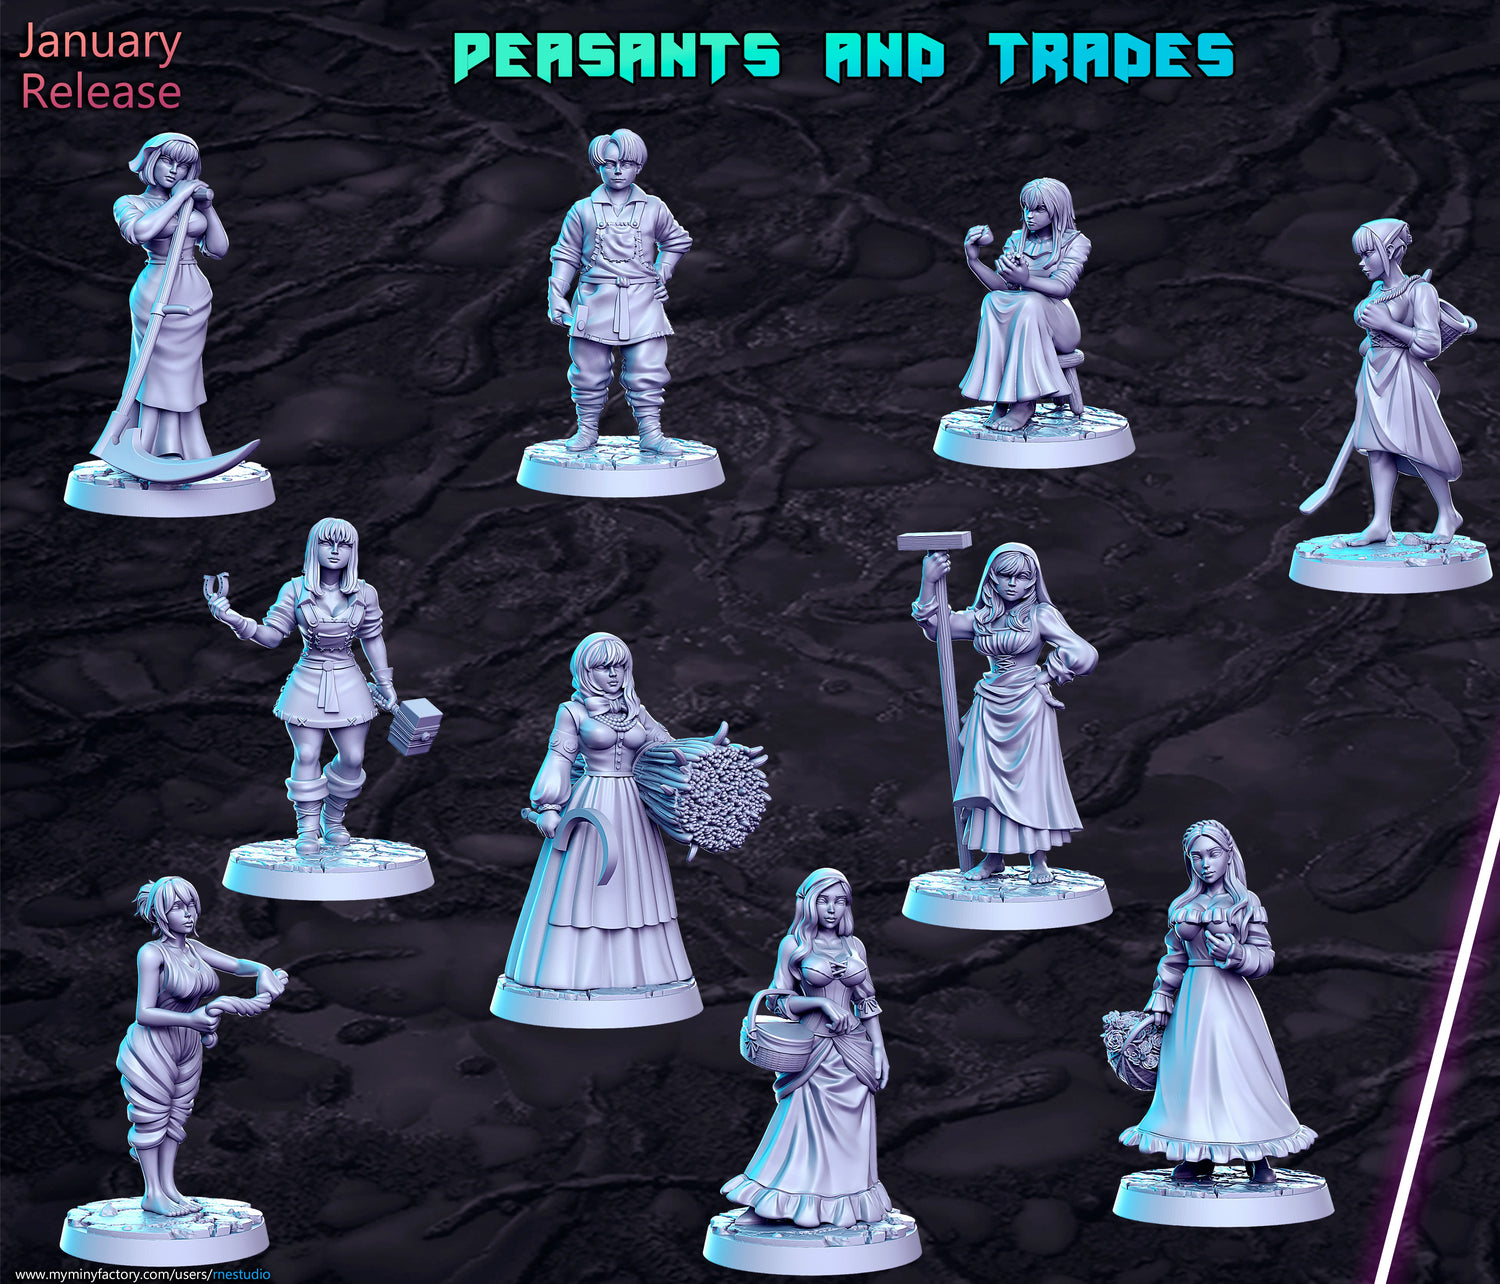 Peasants and Trades